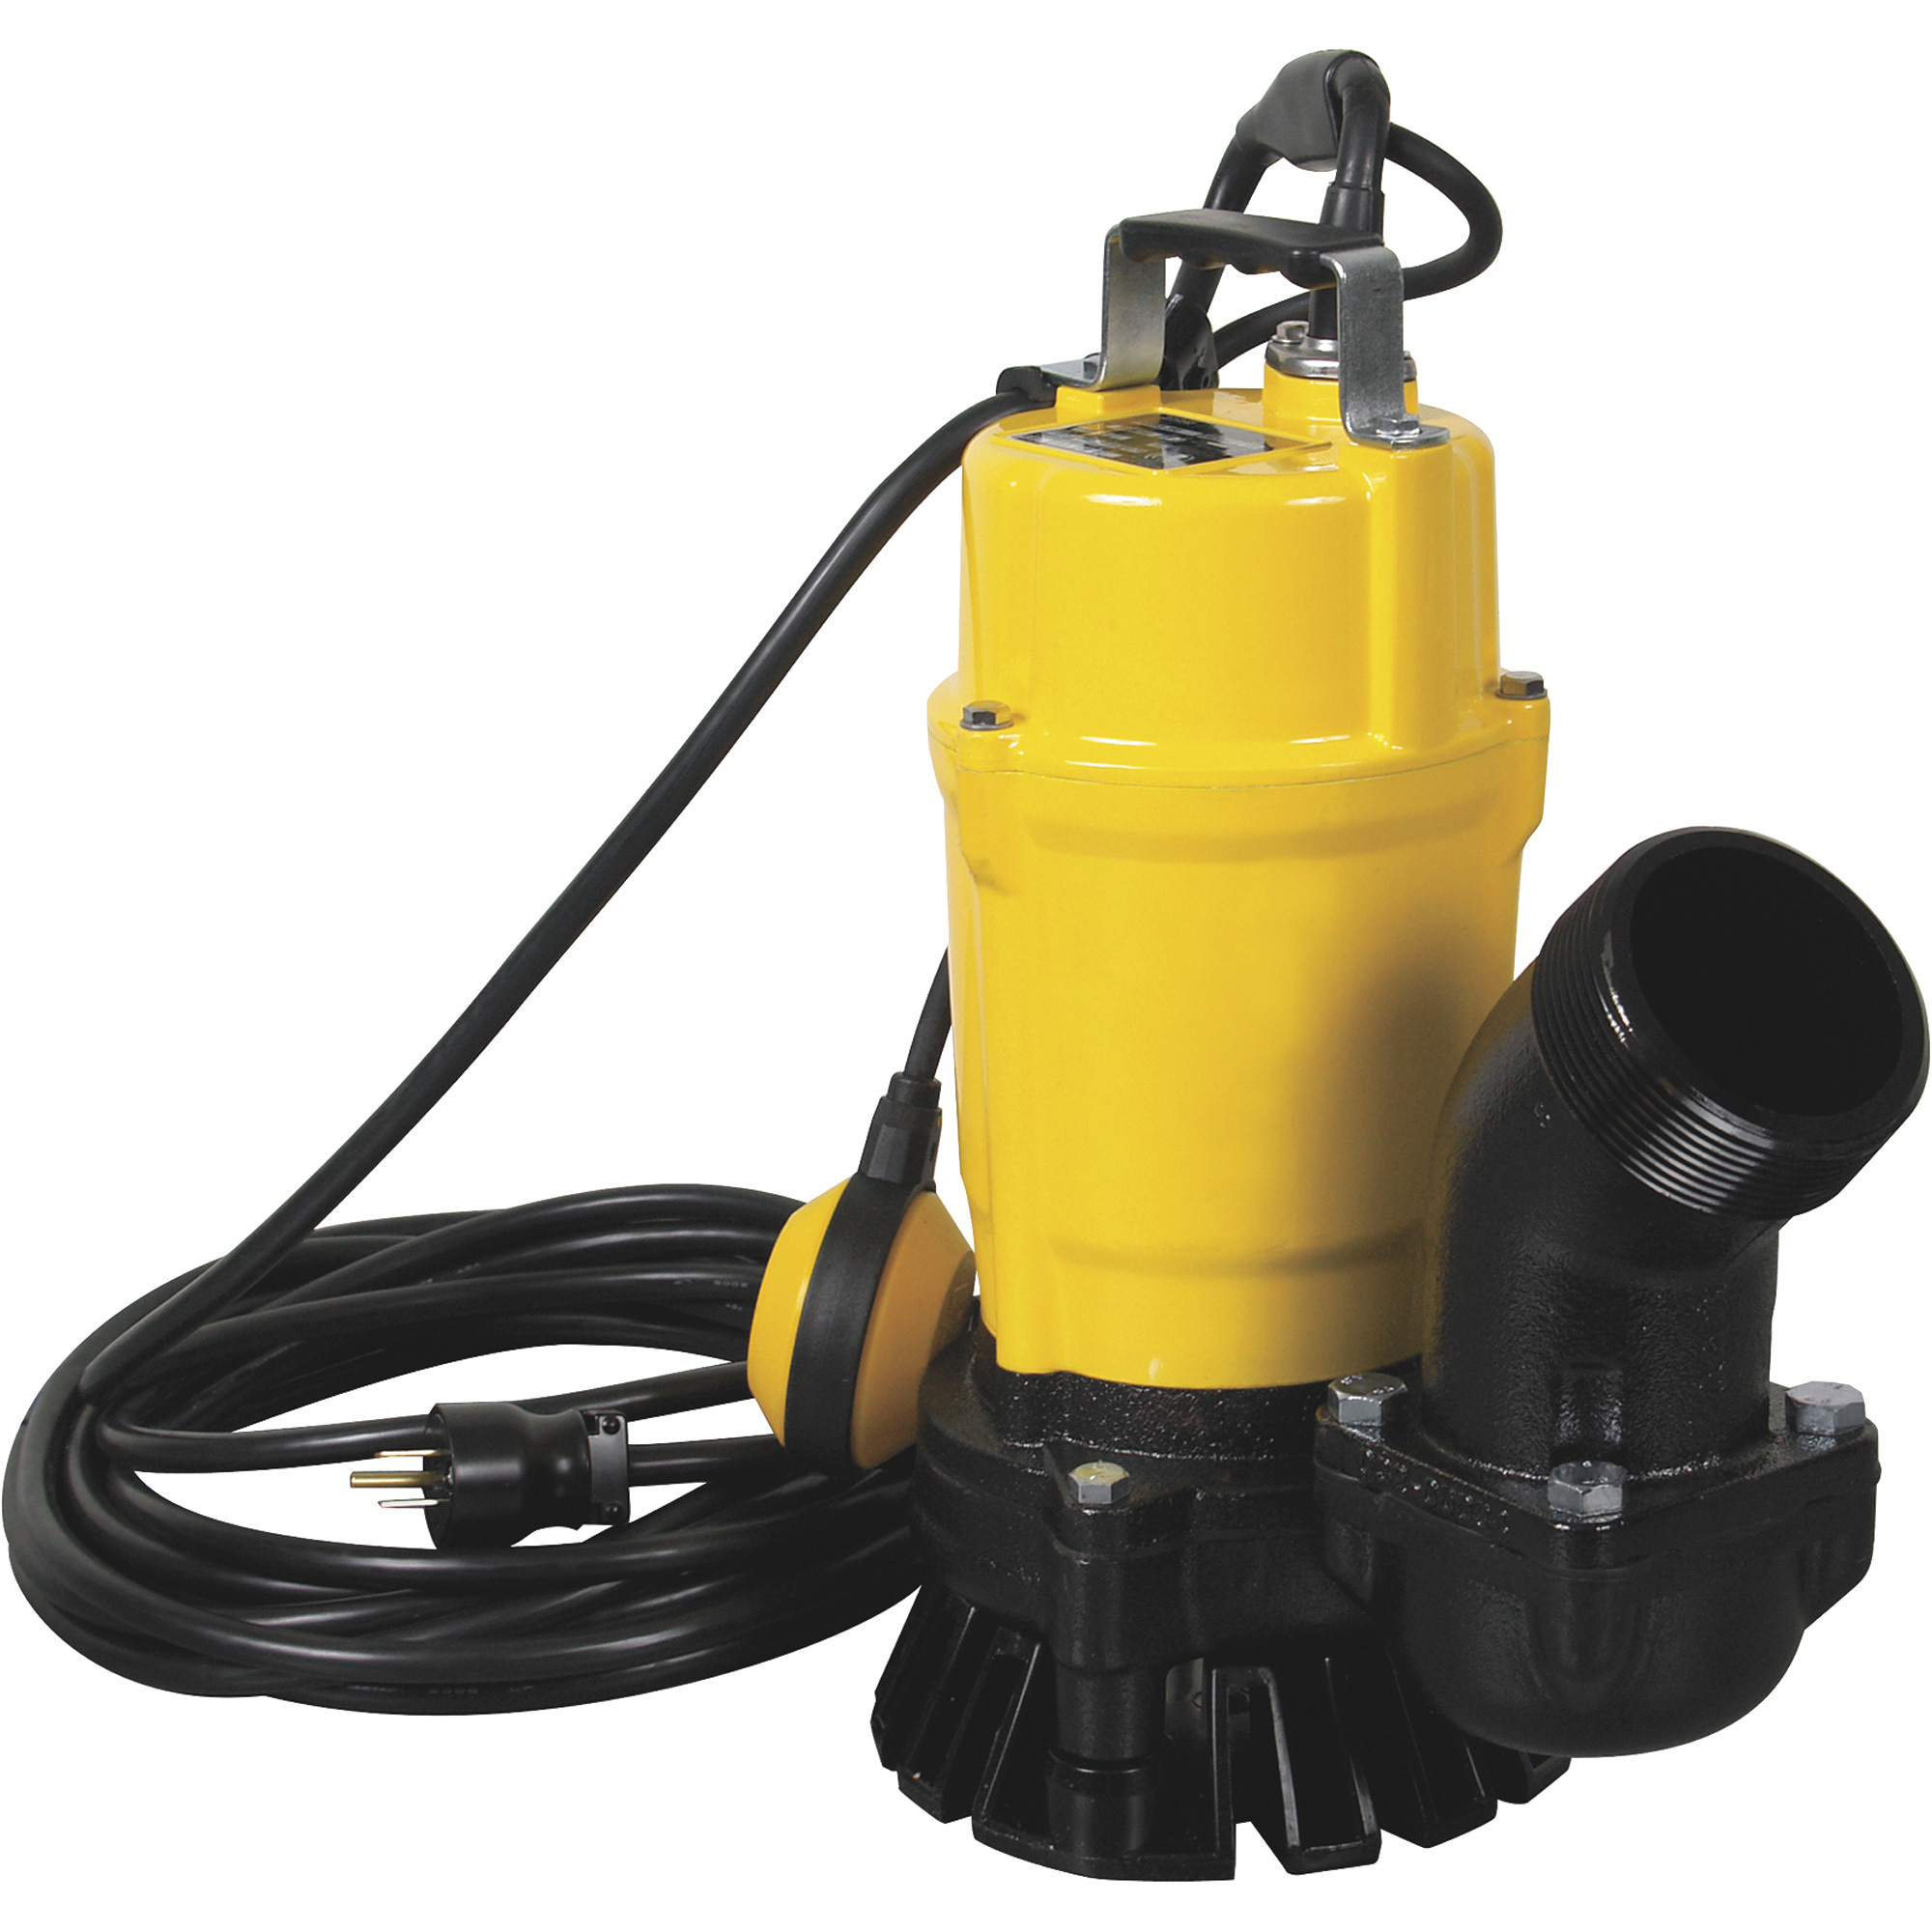 Wacker Neuson Submersible Water Pump with Float, 3600 GPH, 1 HP, Model PST3 750